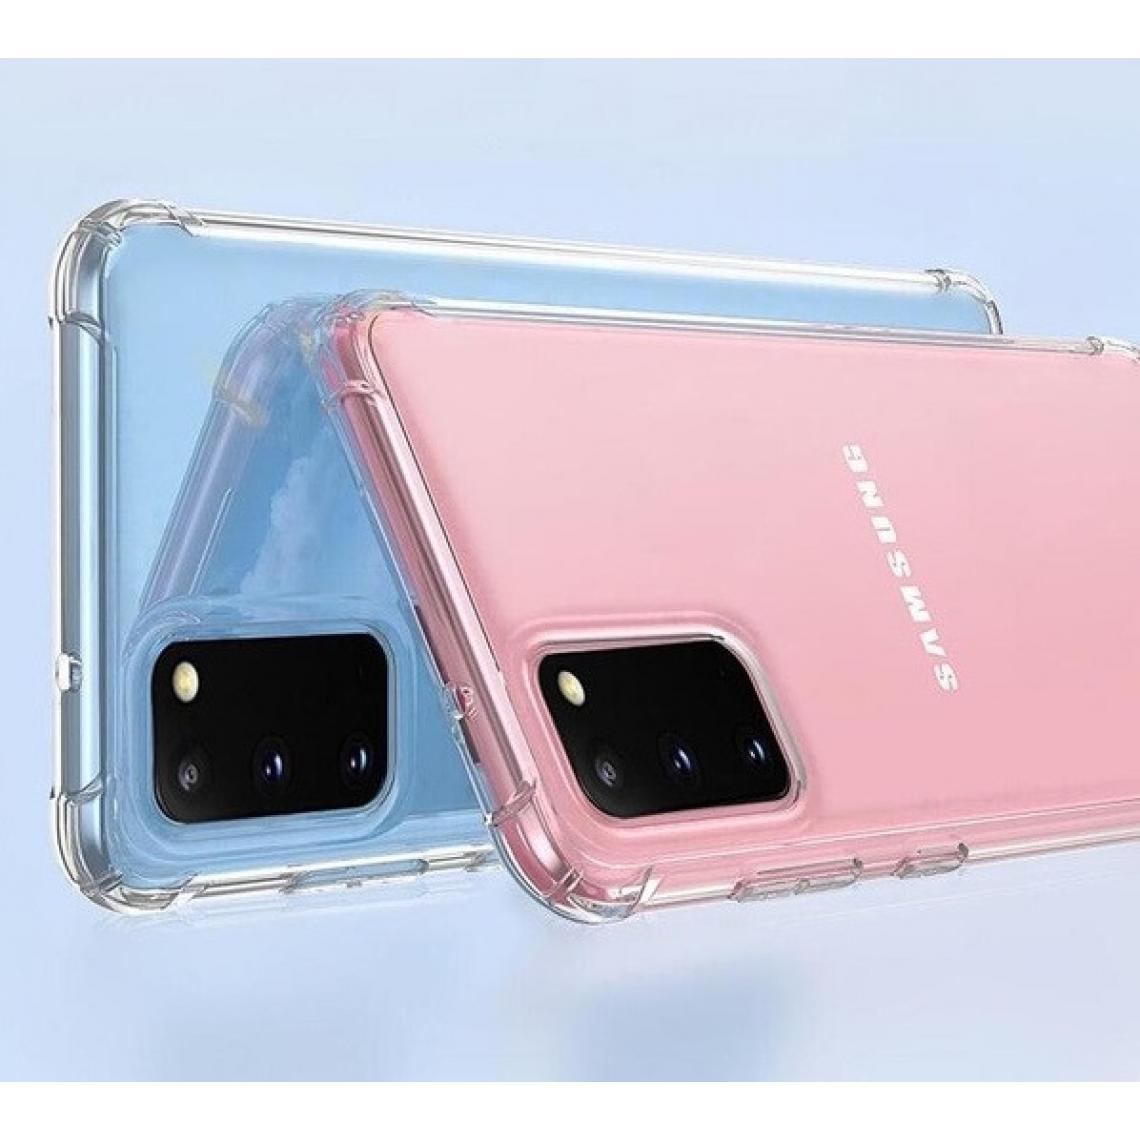 Shot - Coque Silicone Anti-Chocs pour "SAMSUNG Galaxy S20" Transparente Protection Gel Souple (TRANSPARENT) - Coque, étui smartphone